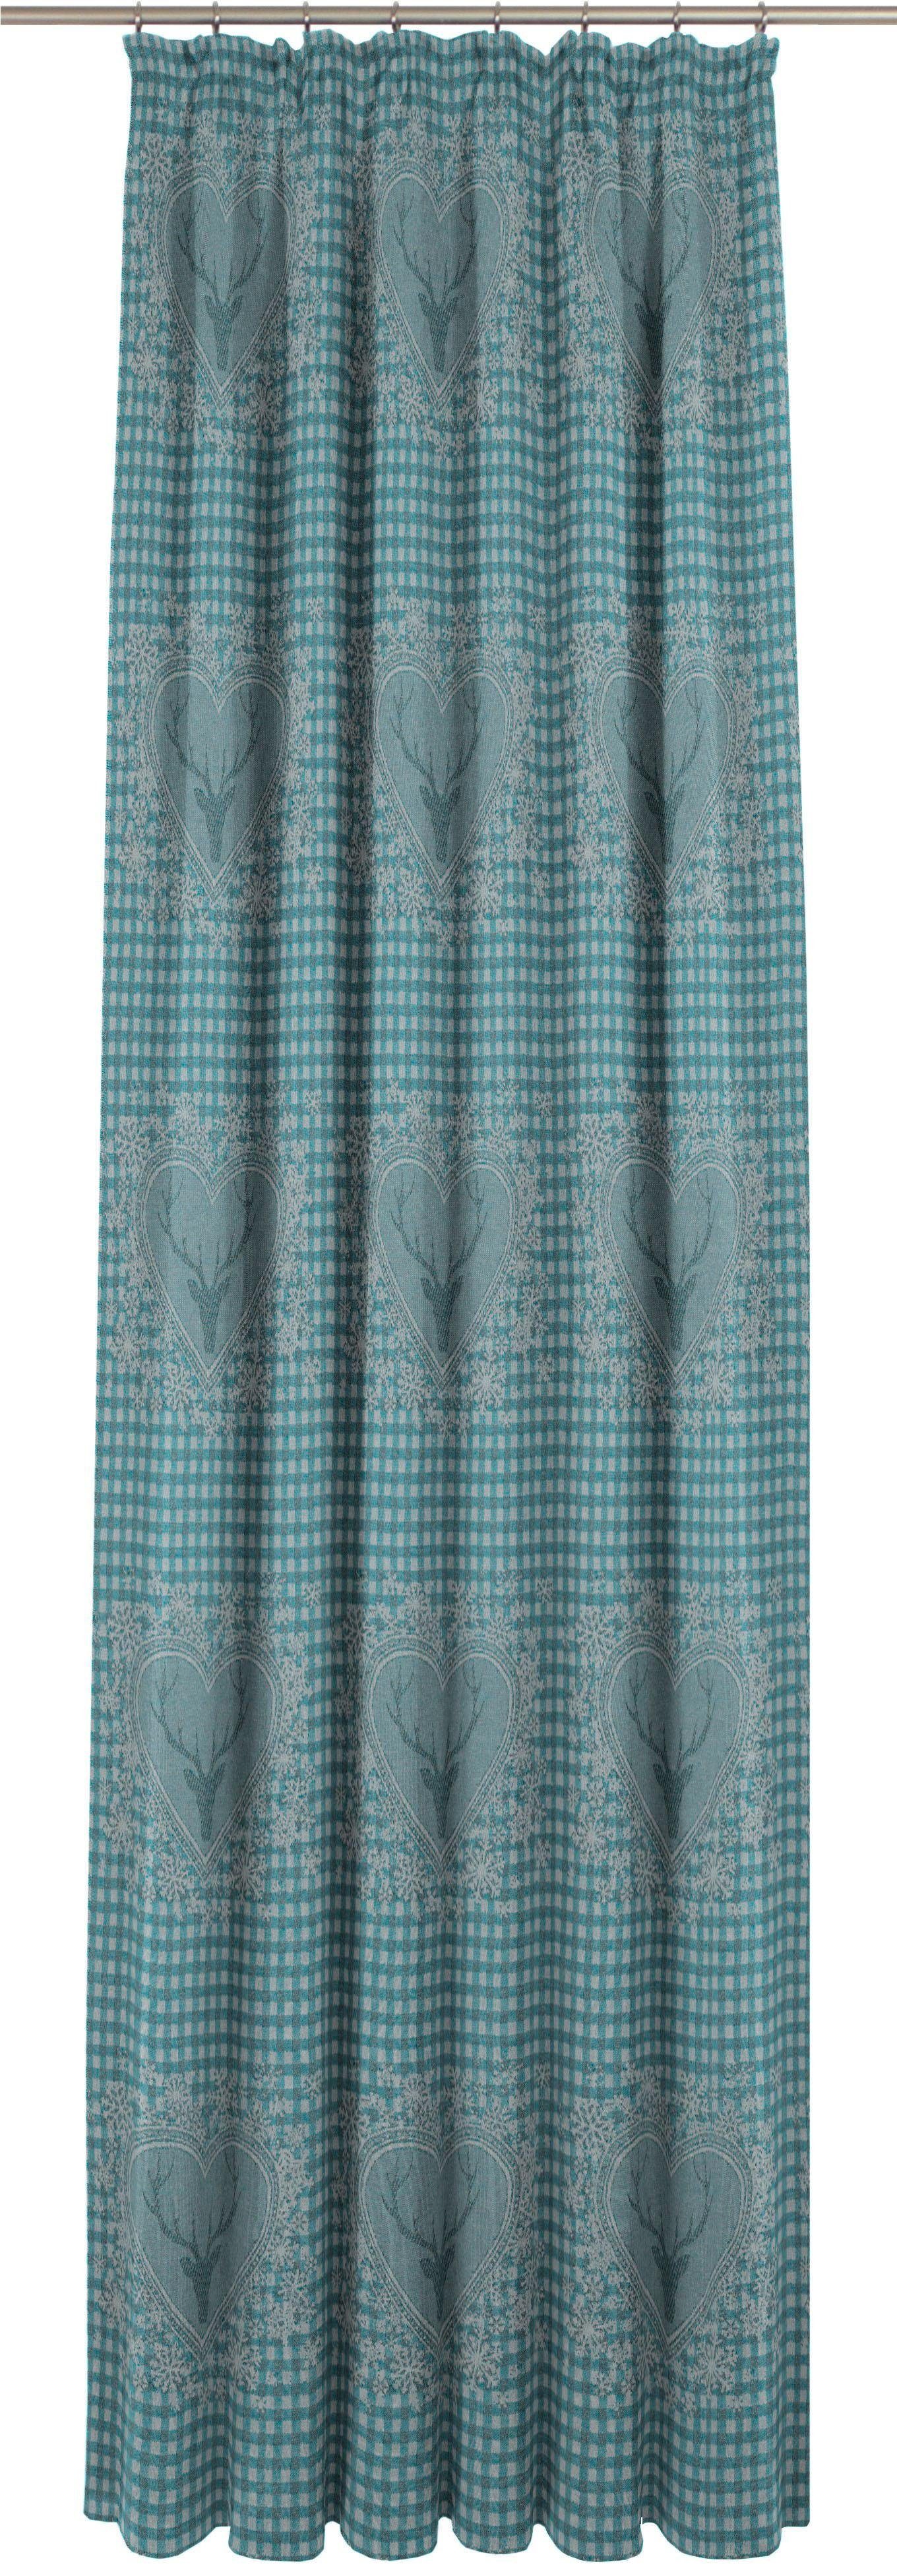 Vorhang Stuben, Wirth, Kräuselband (1 St), blickdicht, Jacquard blau | Fertiggardinen